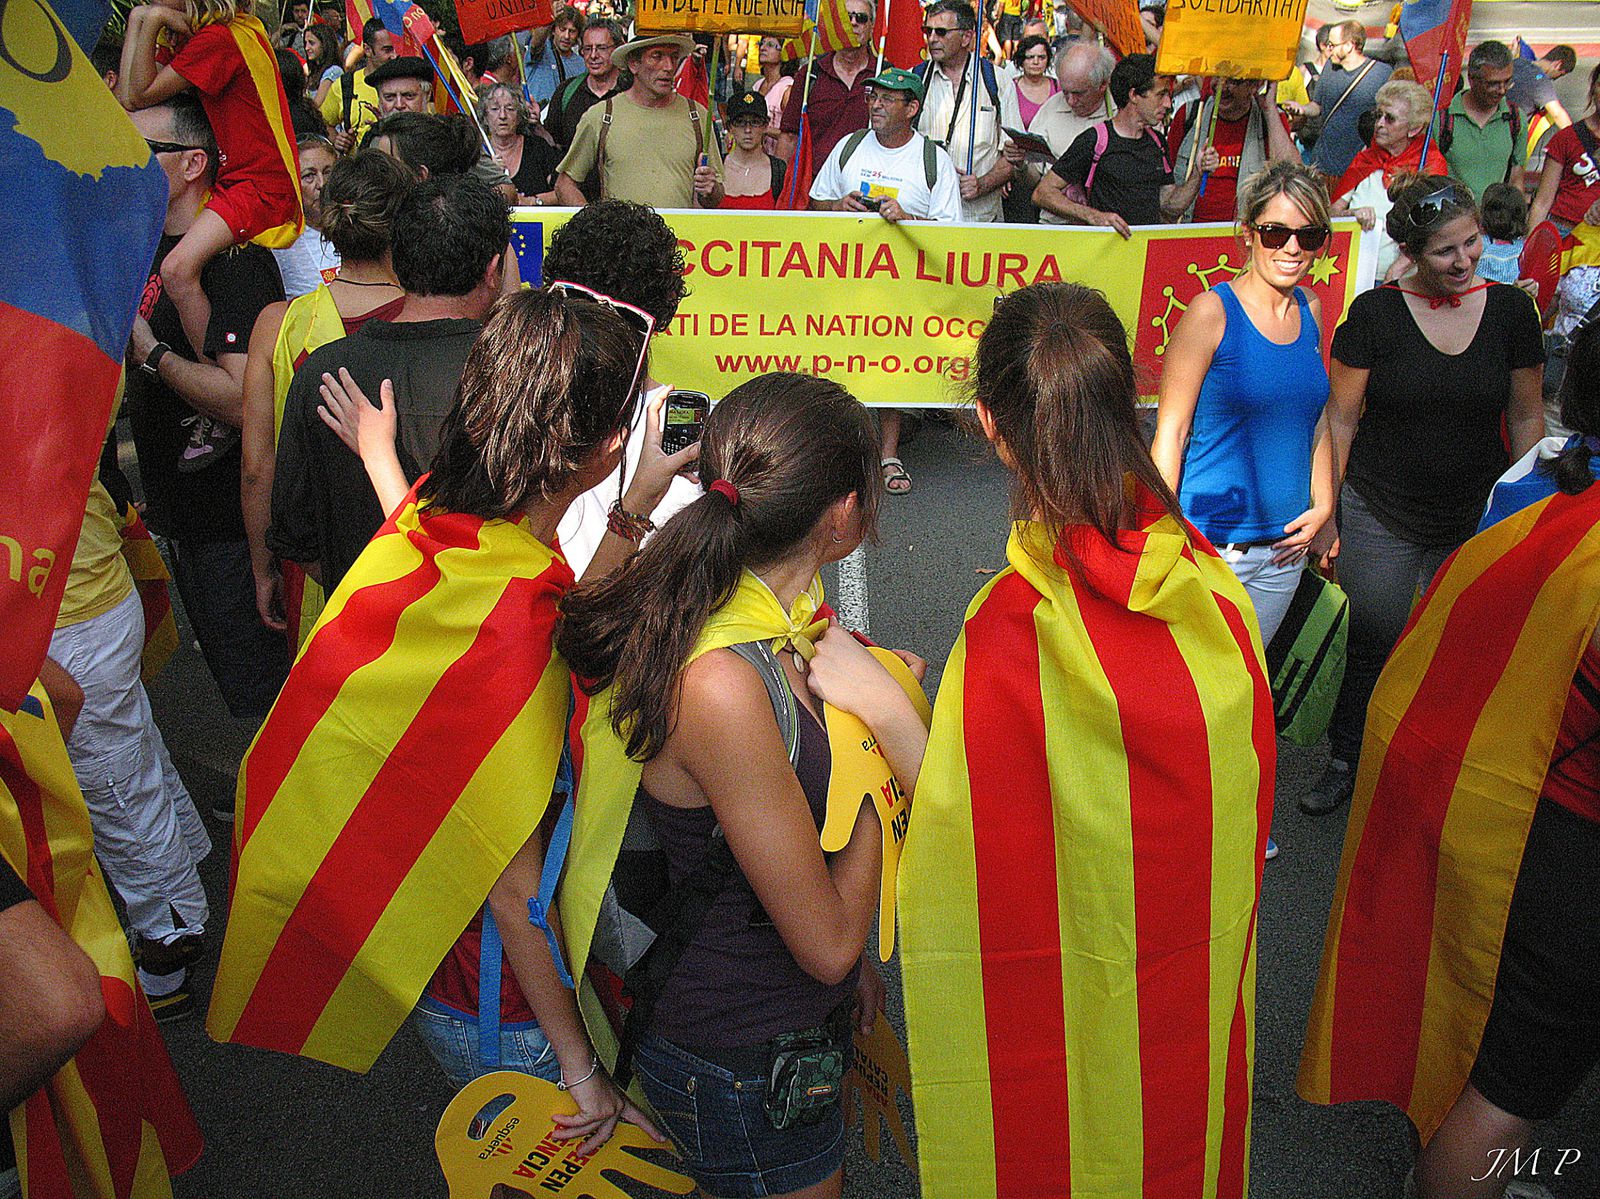 Occitan Nation Party in Barcelona